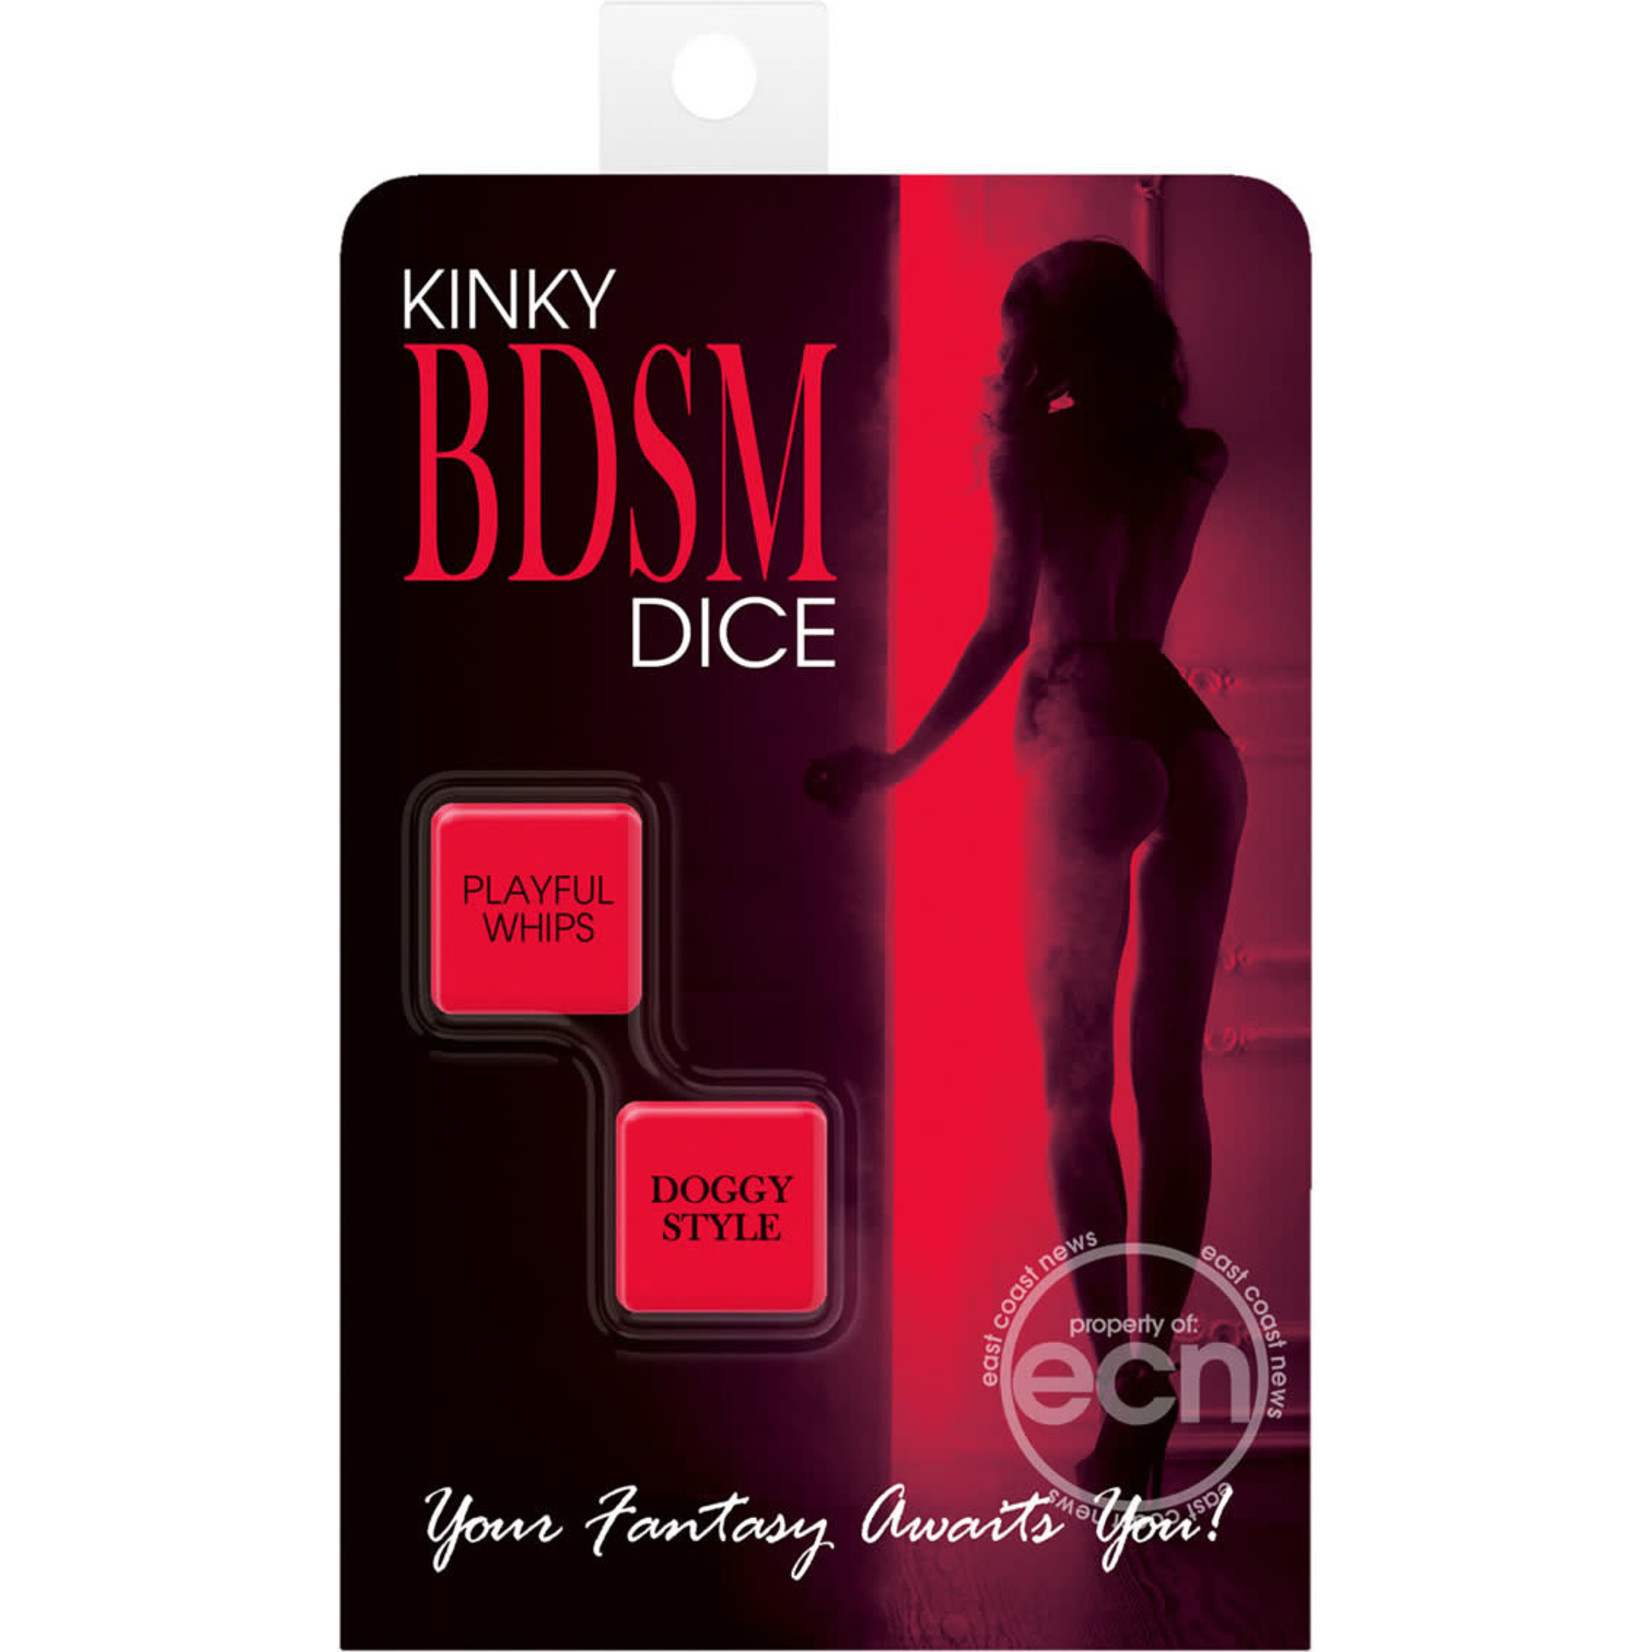 Kinky BDSM Dice Game